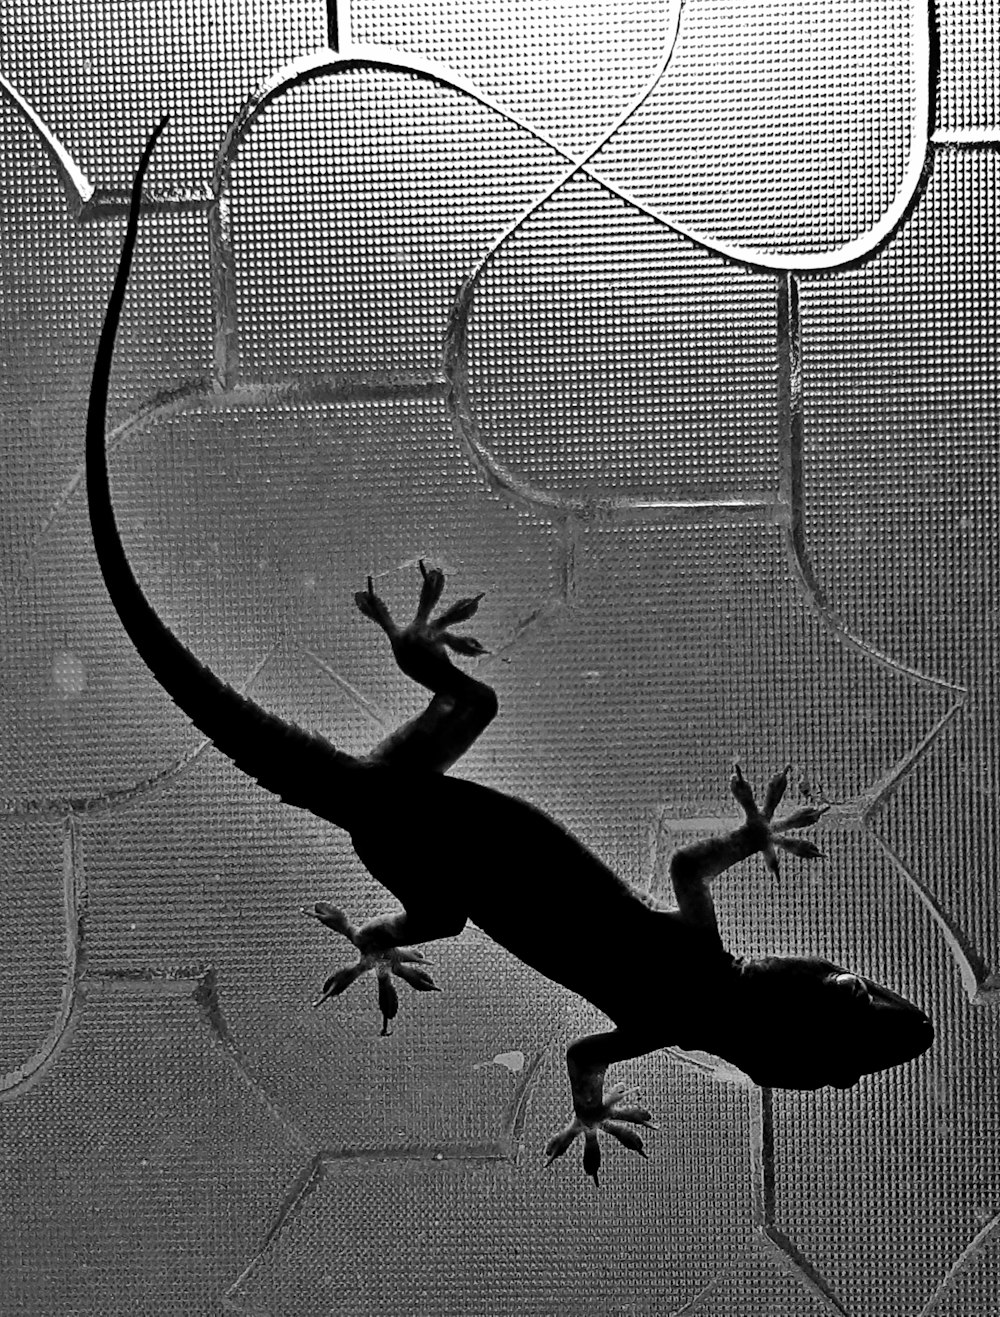 silhouette of lizard on glass